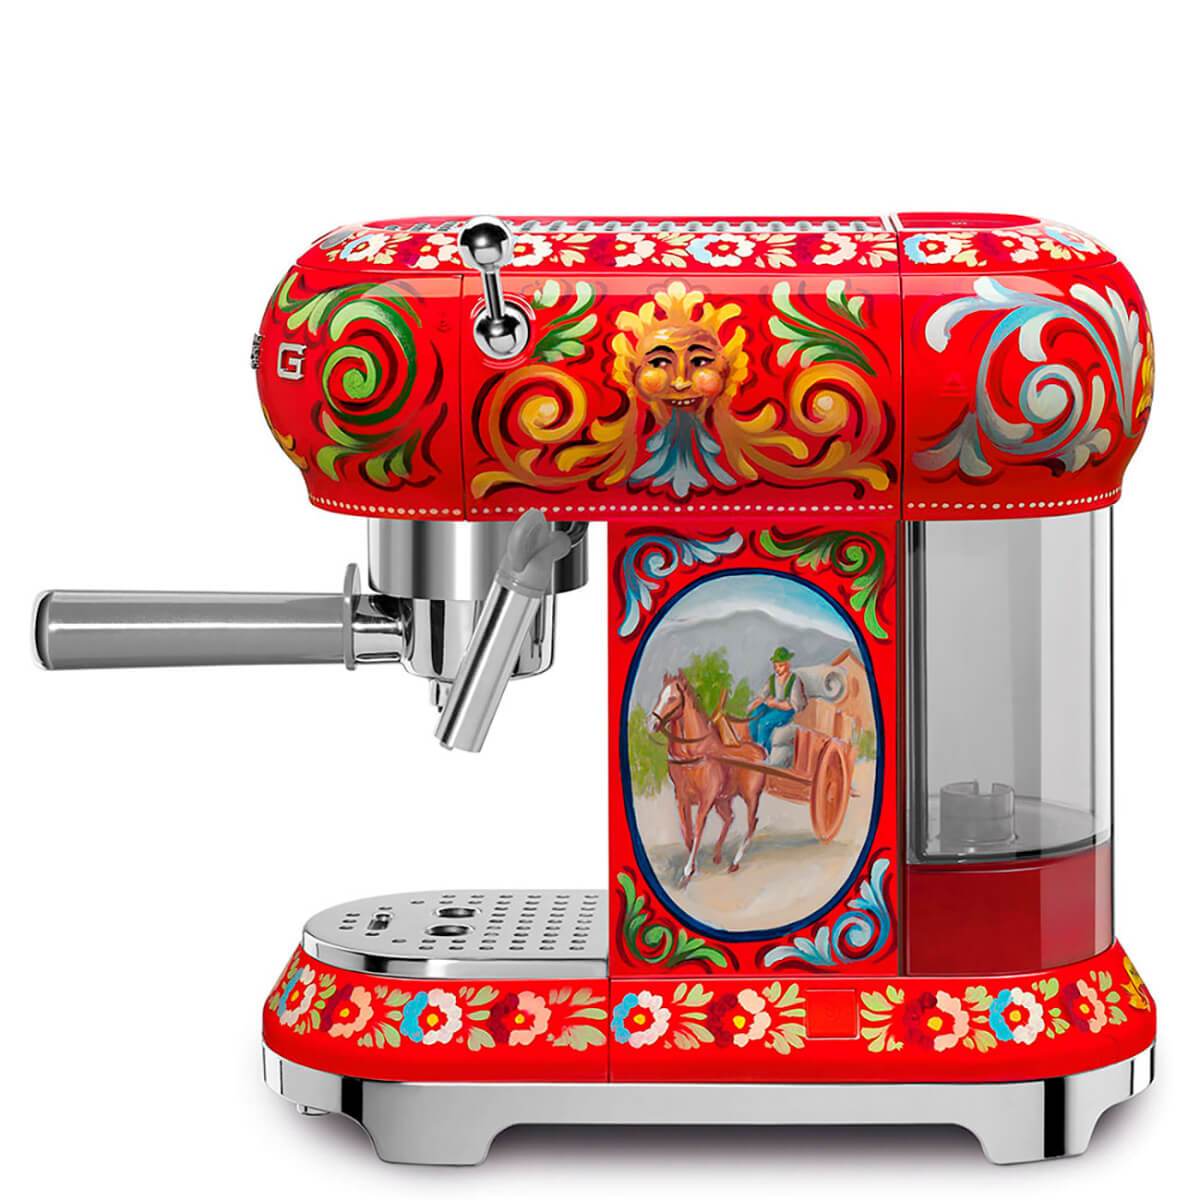 Smeg Dolce & Gabbana Espresso Machine , 50's Retro Style